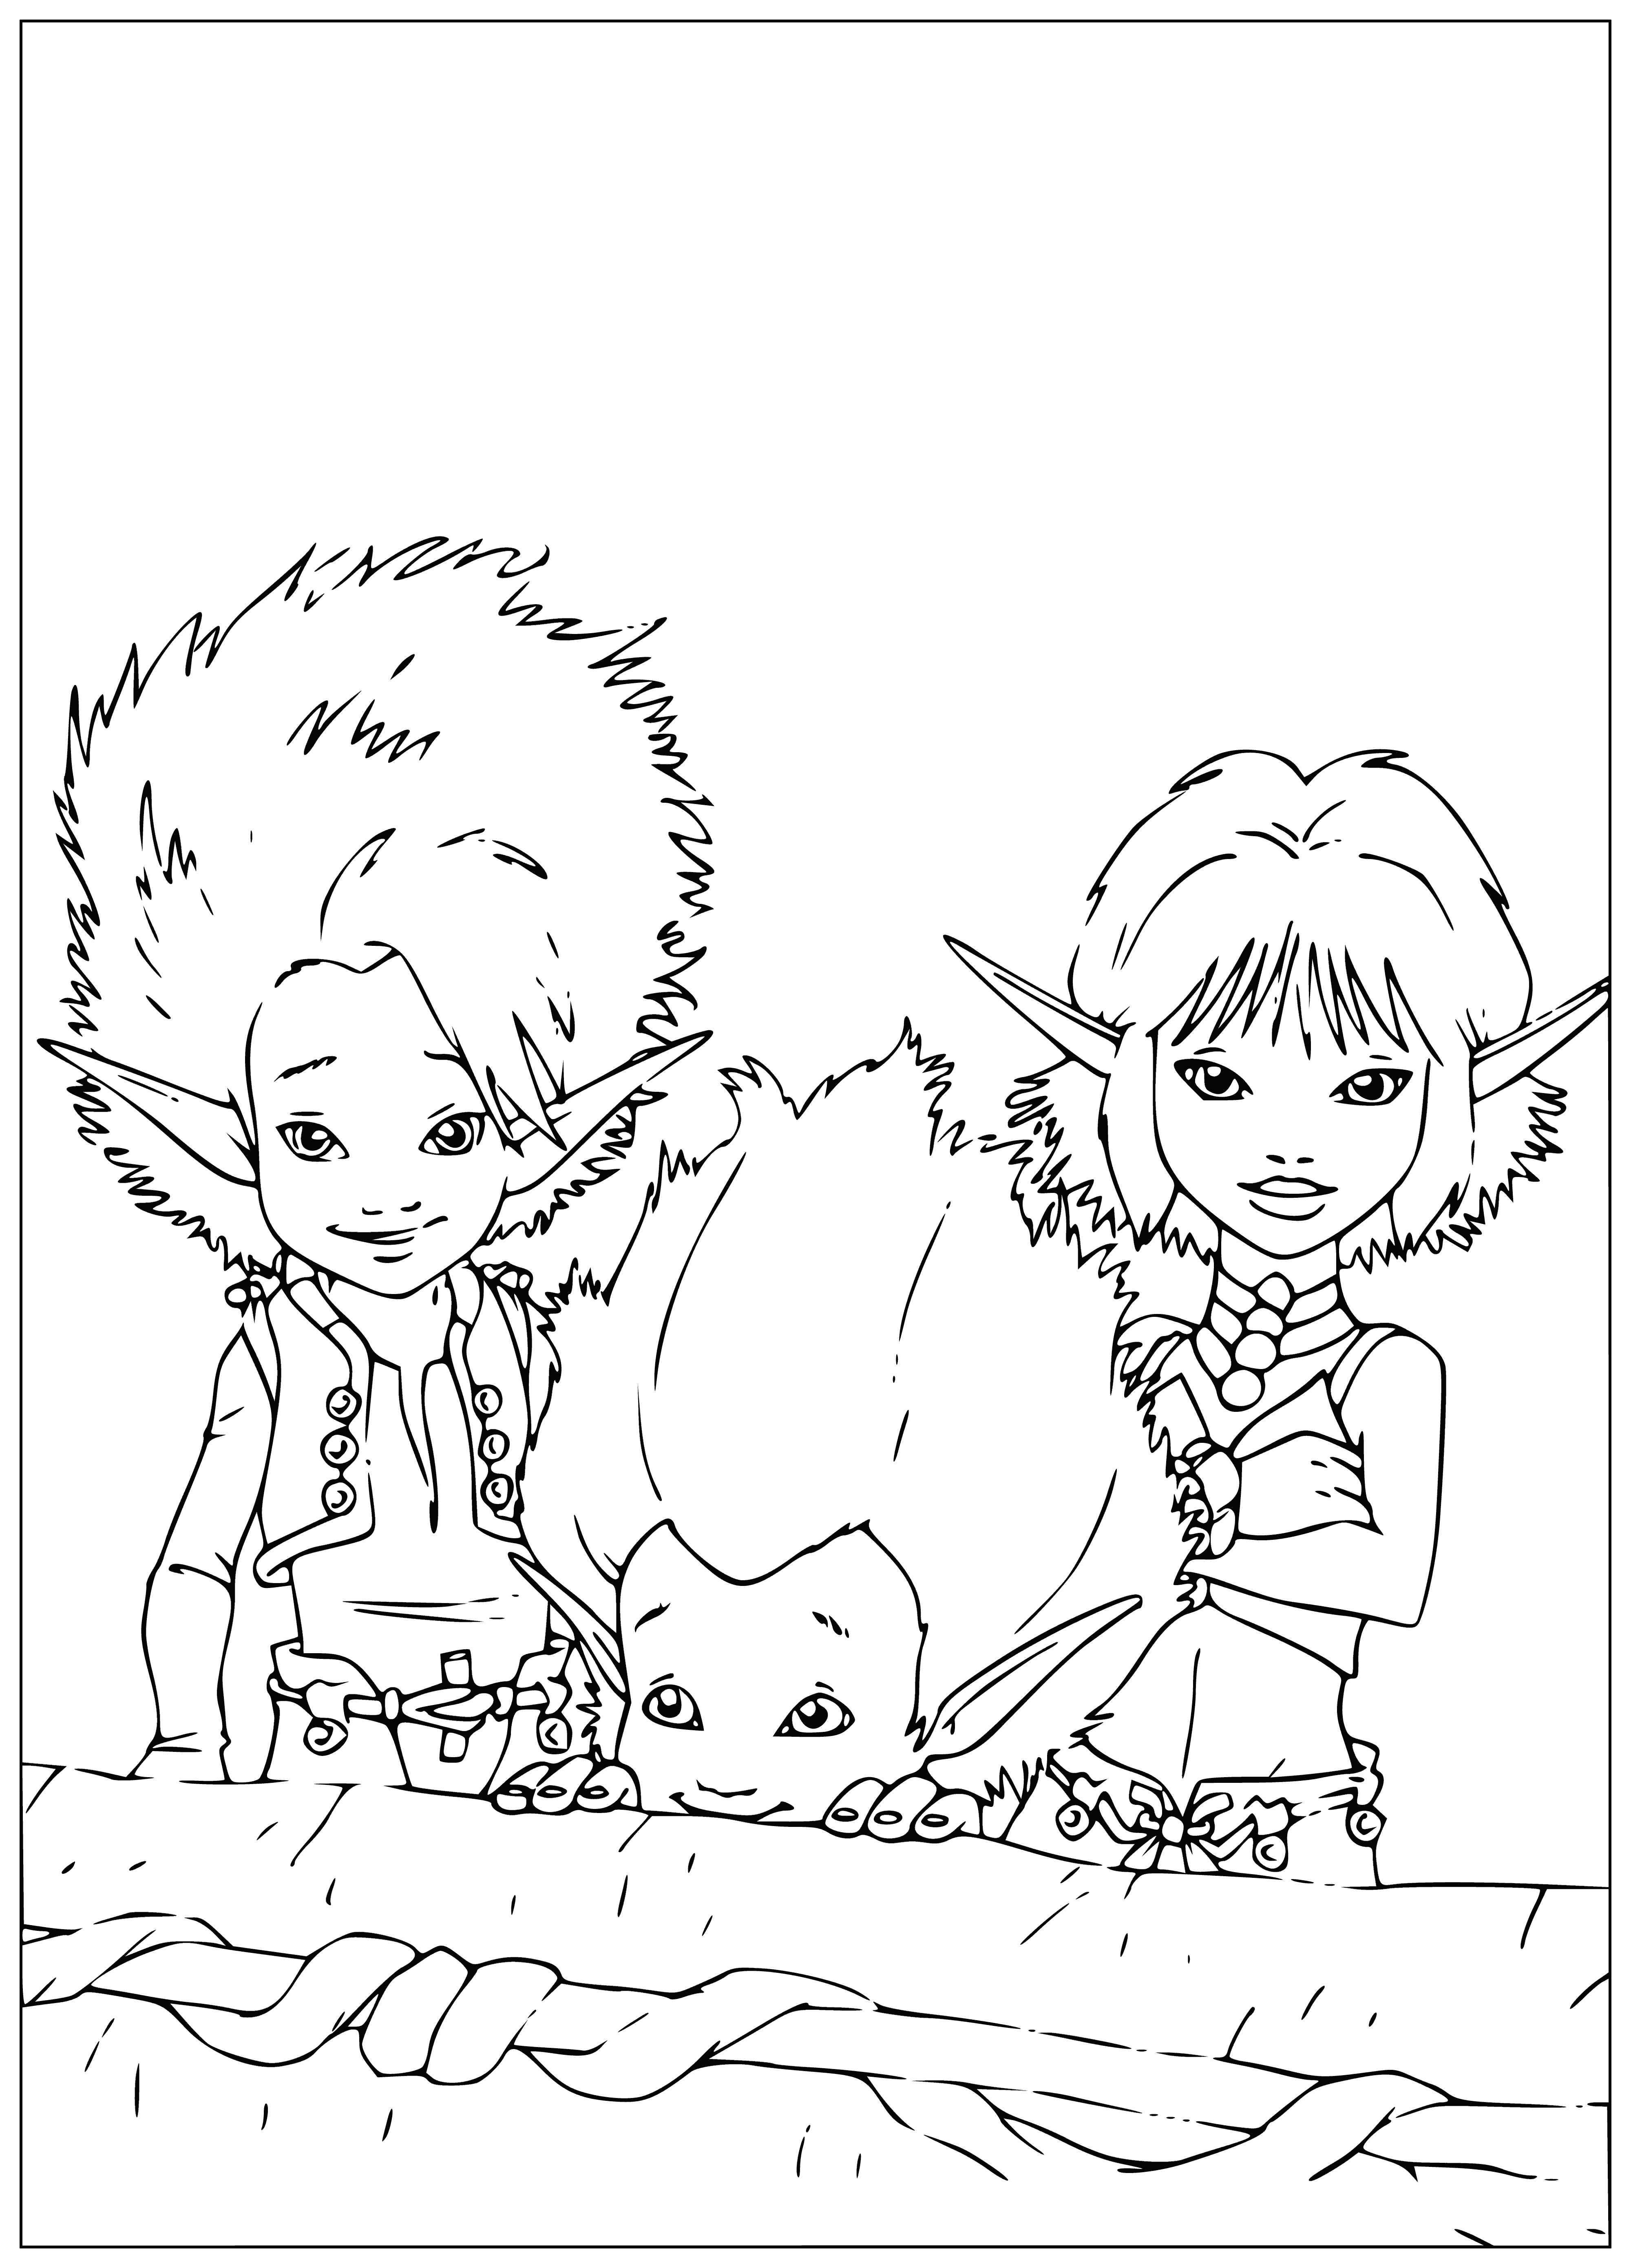 Arthur, Selenia and Barakhlyush coloring page